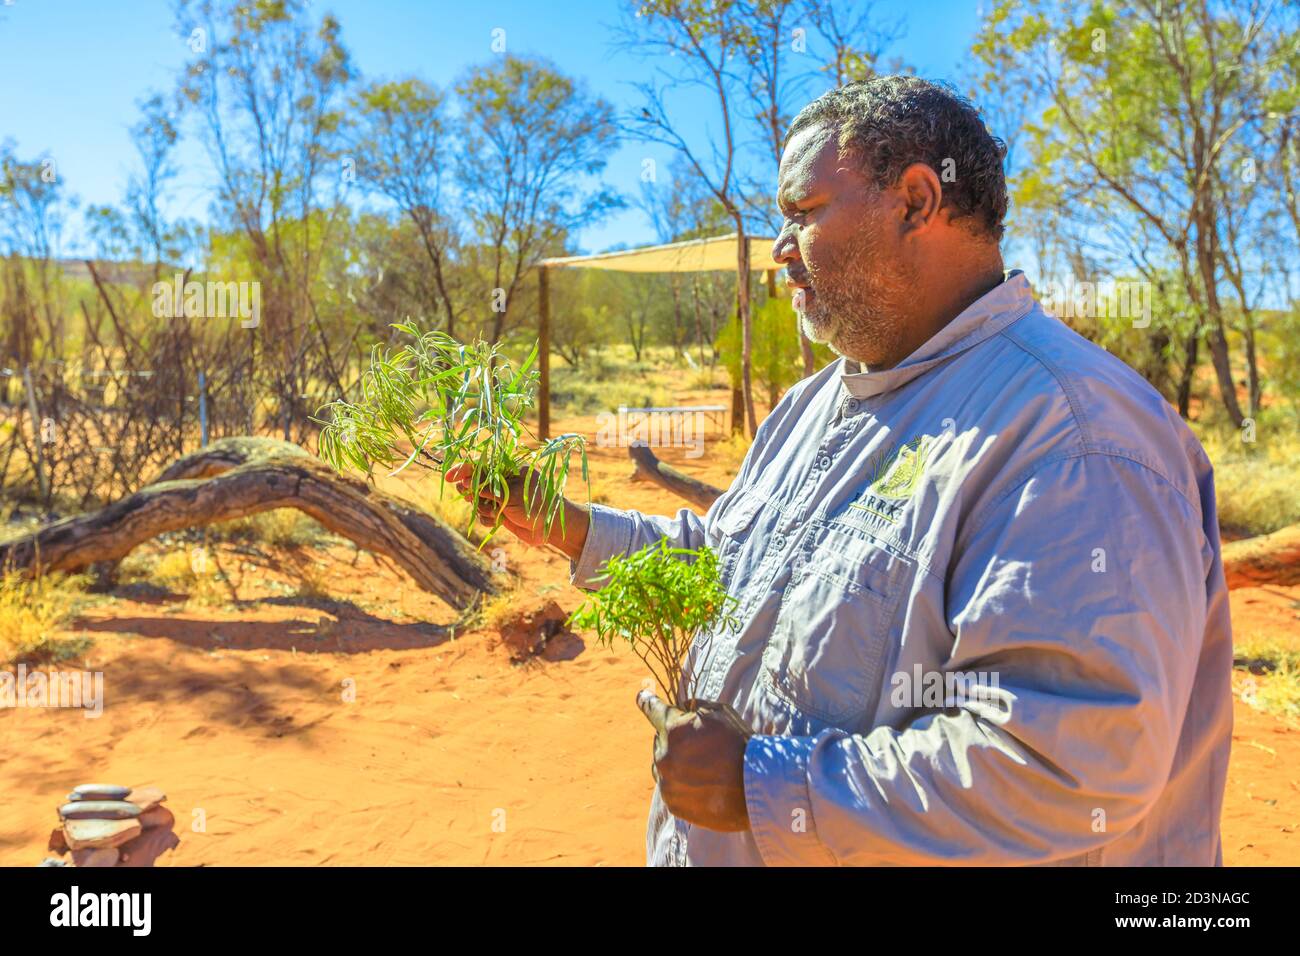 Kings Creek, Australia - Aug 21, 2019: Australian aboriginal native man shows the bush plants used during the traditional smoking ceremony of local Stock Photo